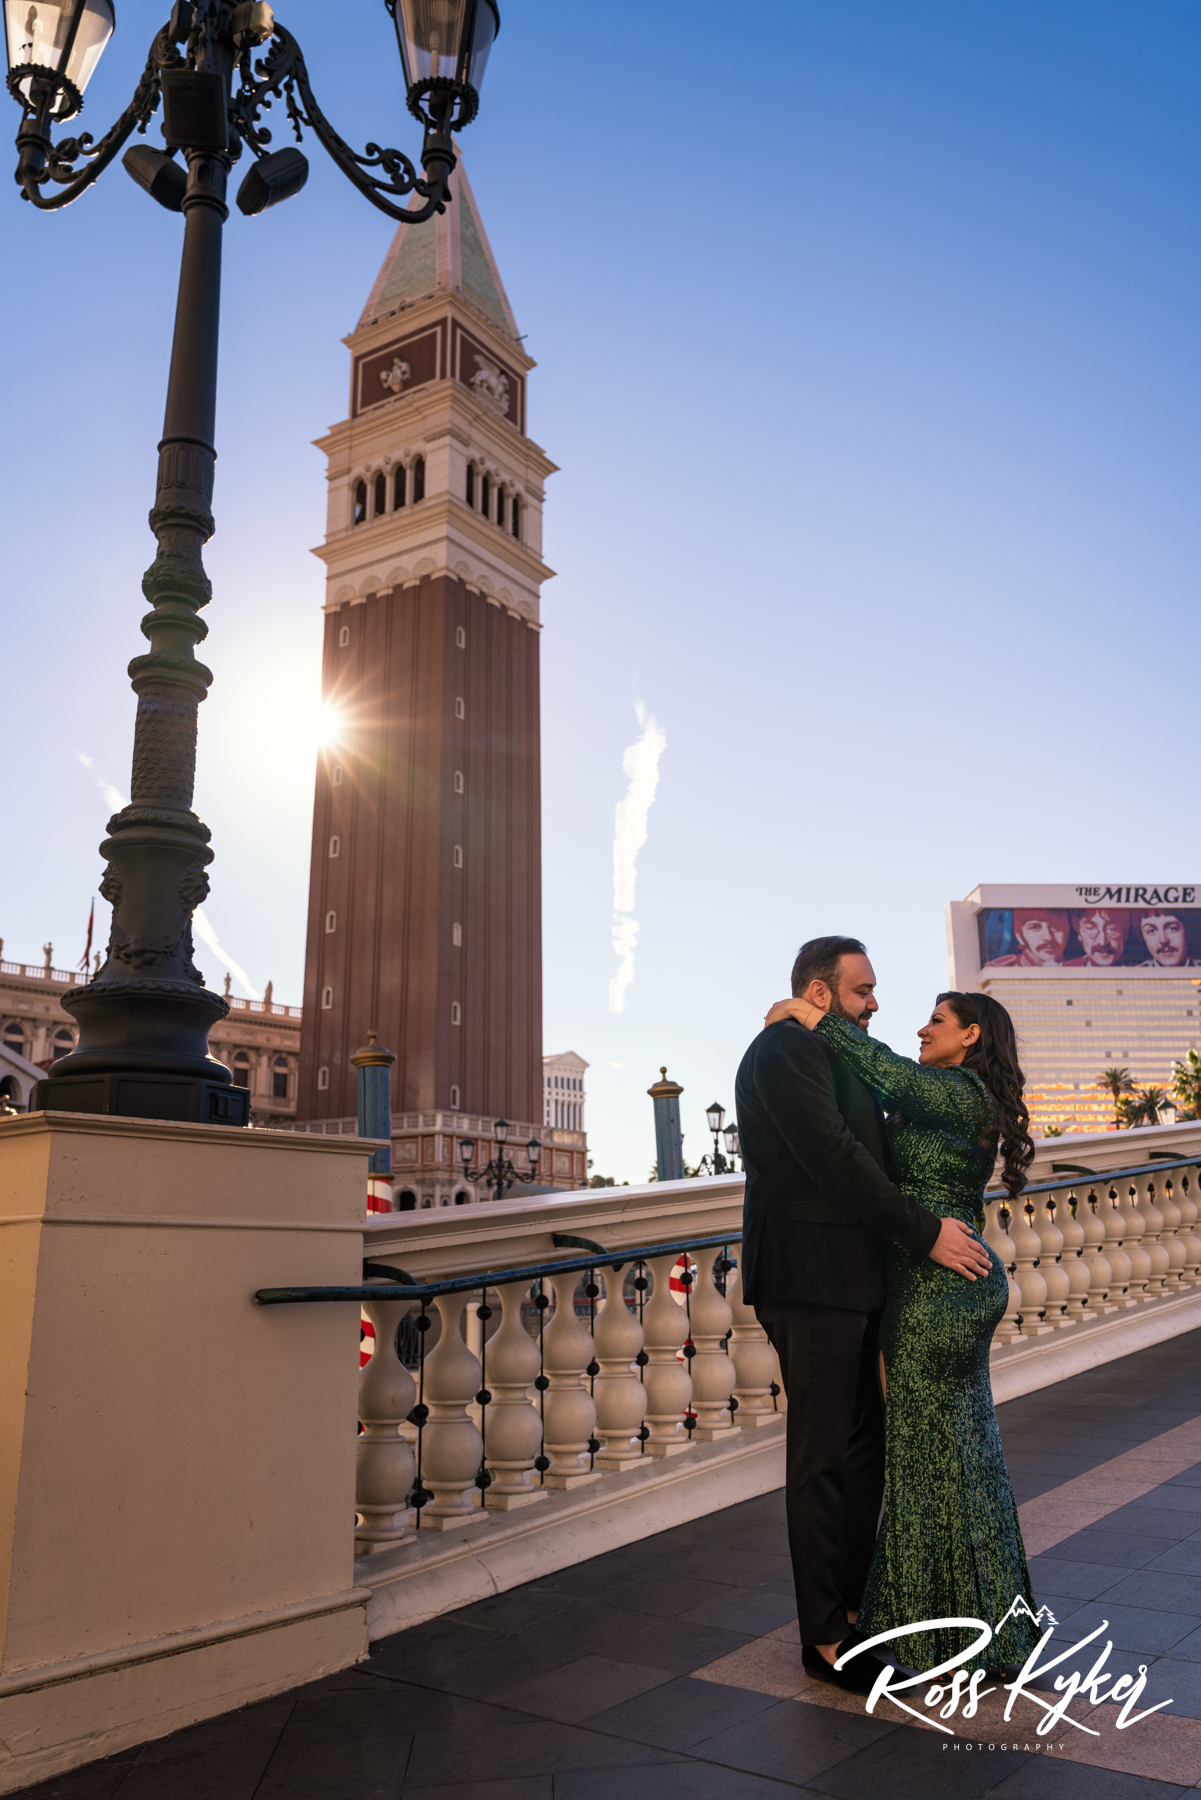 Las Vegas Strip Engagement | Las Vegas, Nv Photographer